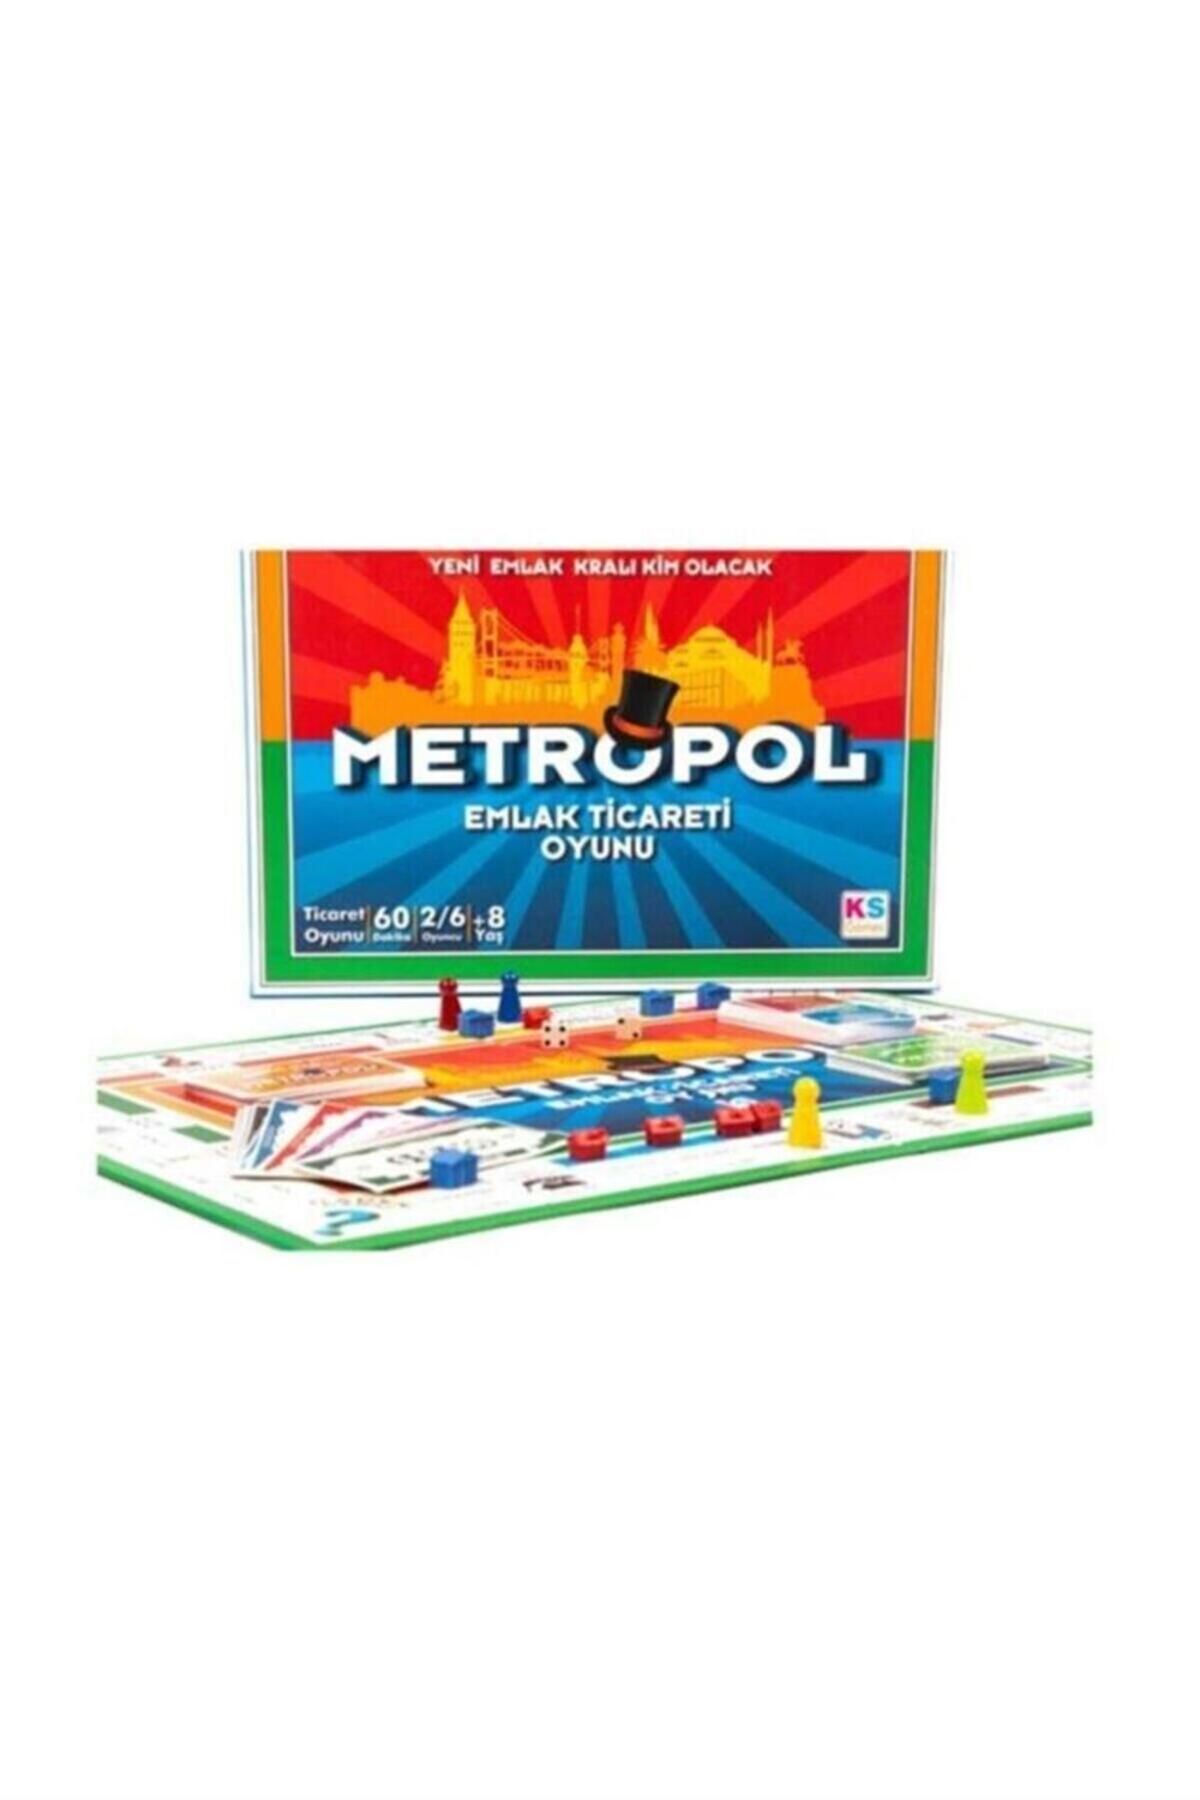 Ks Games Metropol Emlak Ticaret Oyunu